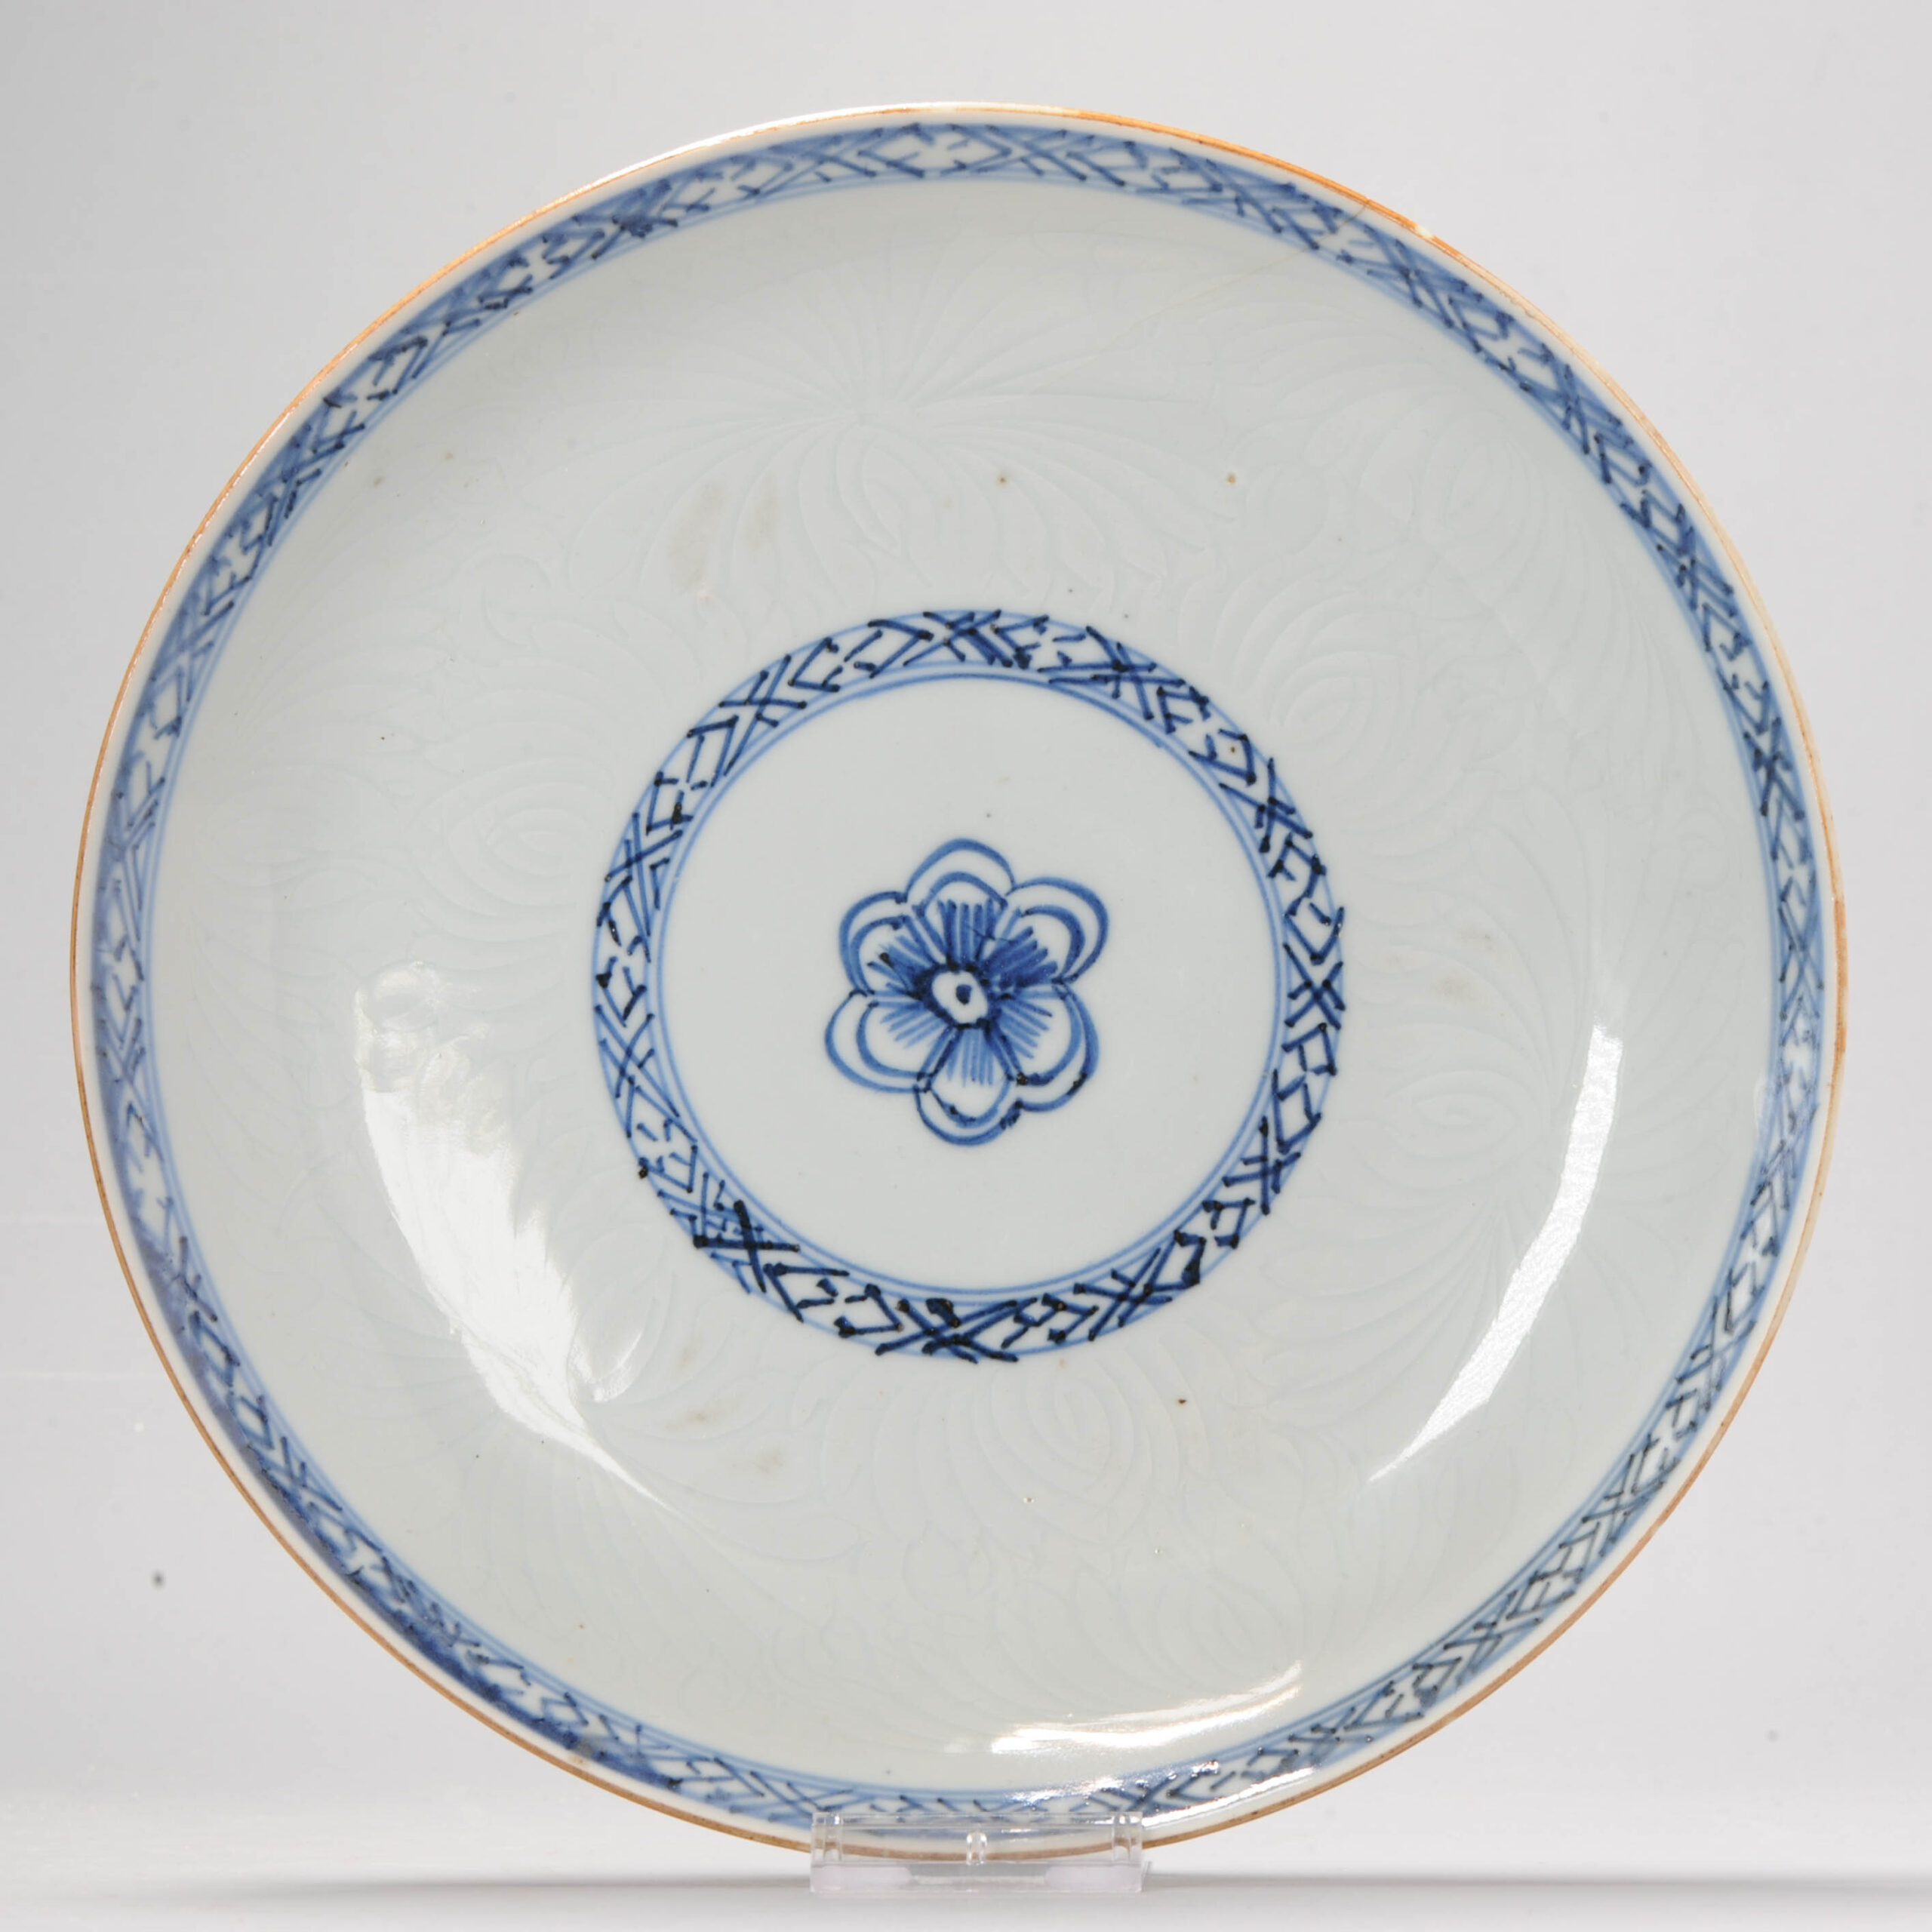 1130 Lovely Kangxi/Yongzheng Blue and White plate often used for Amsterdam Bont